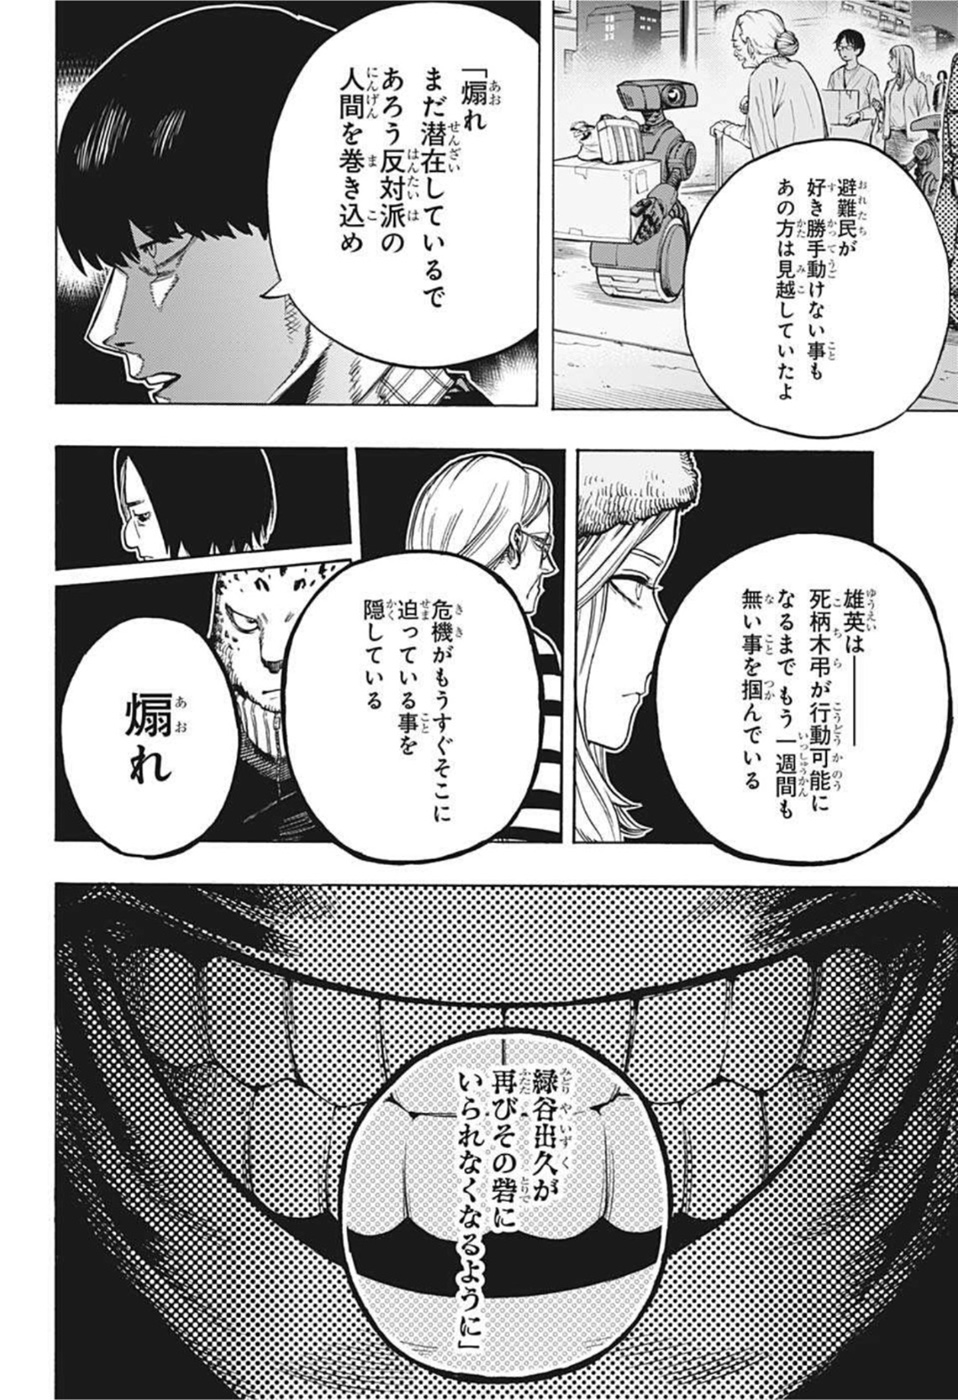 Boku no Hero Academia - Chapter 342 - Page 2